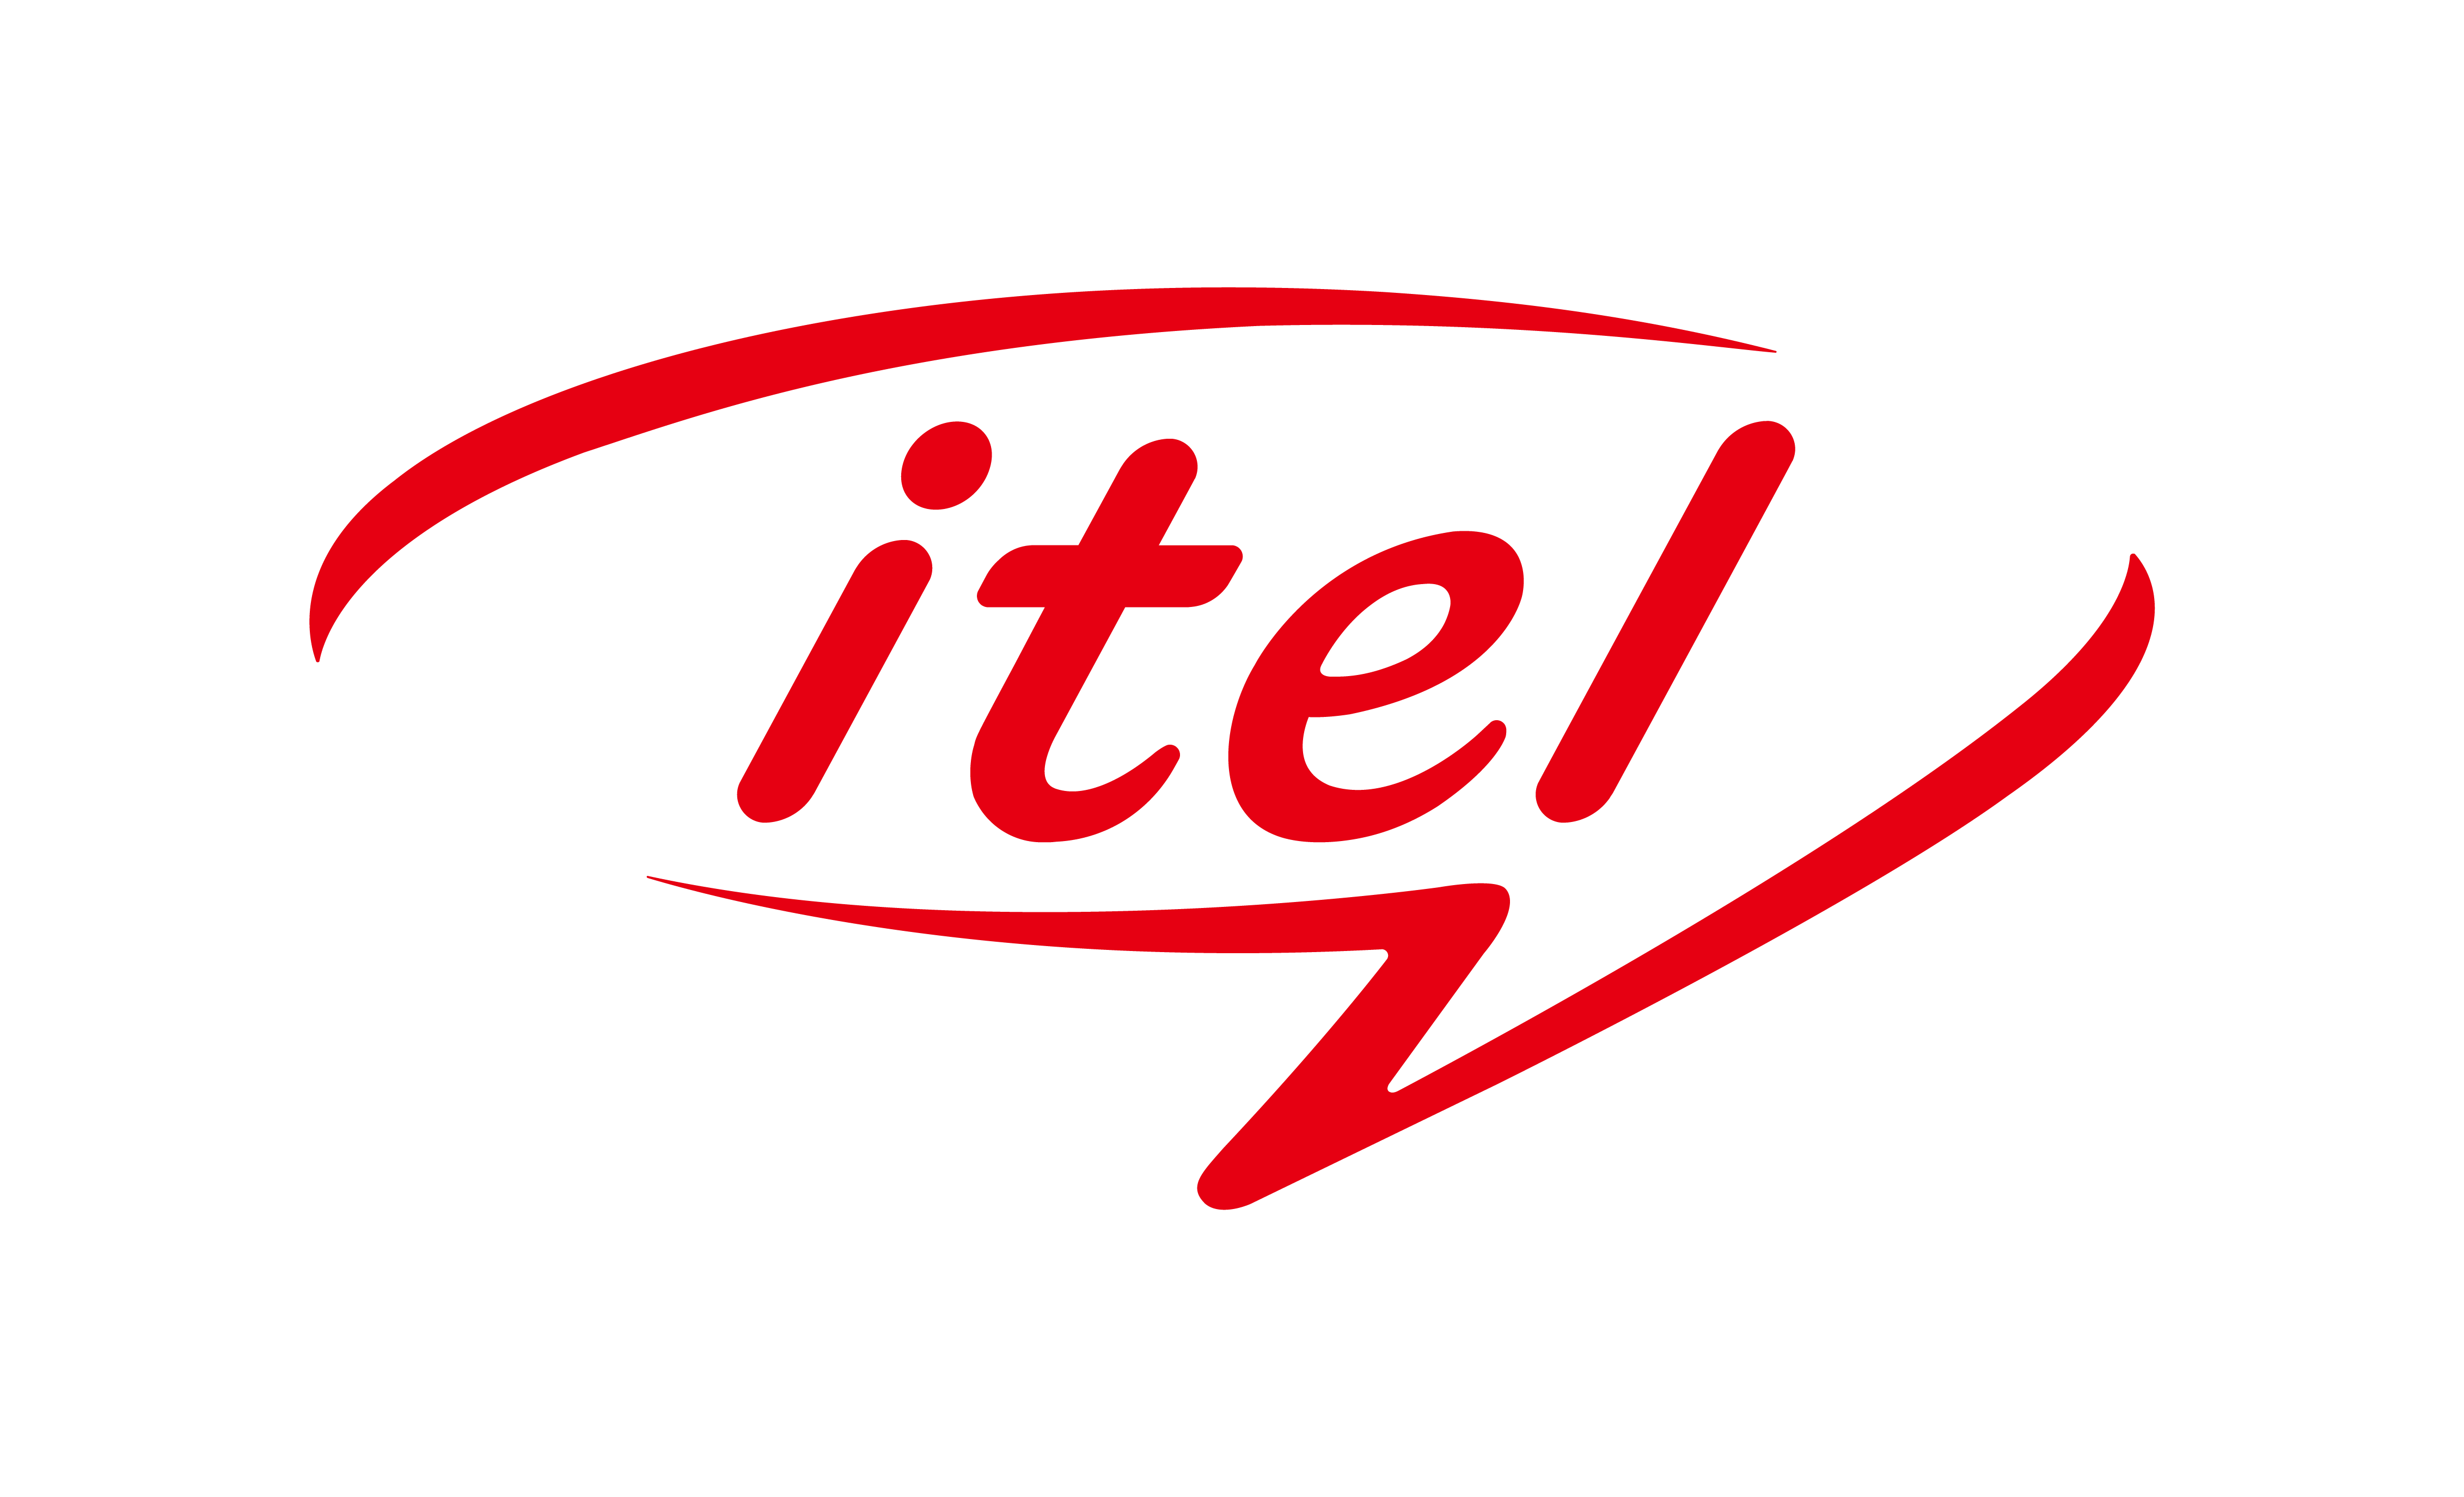 Itel_Mobile_logo